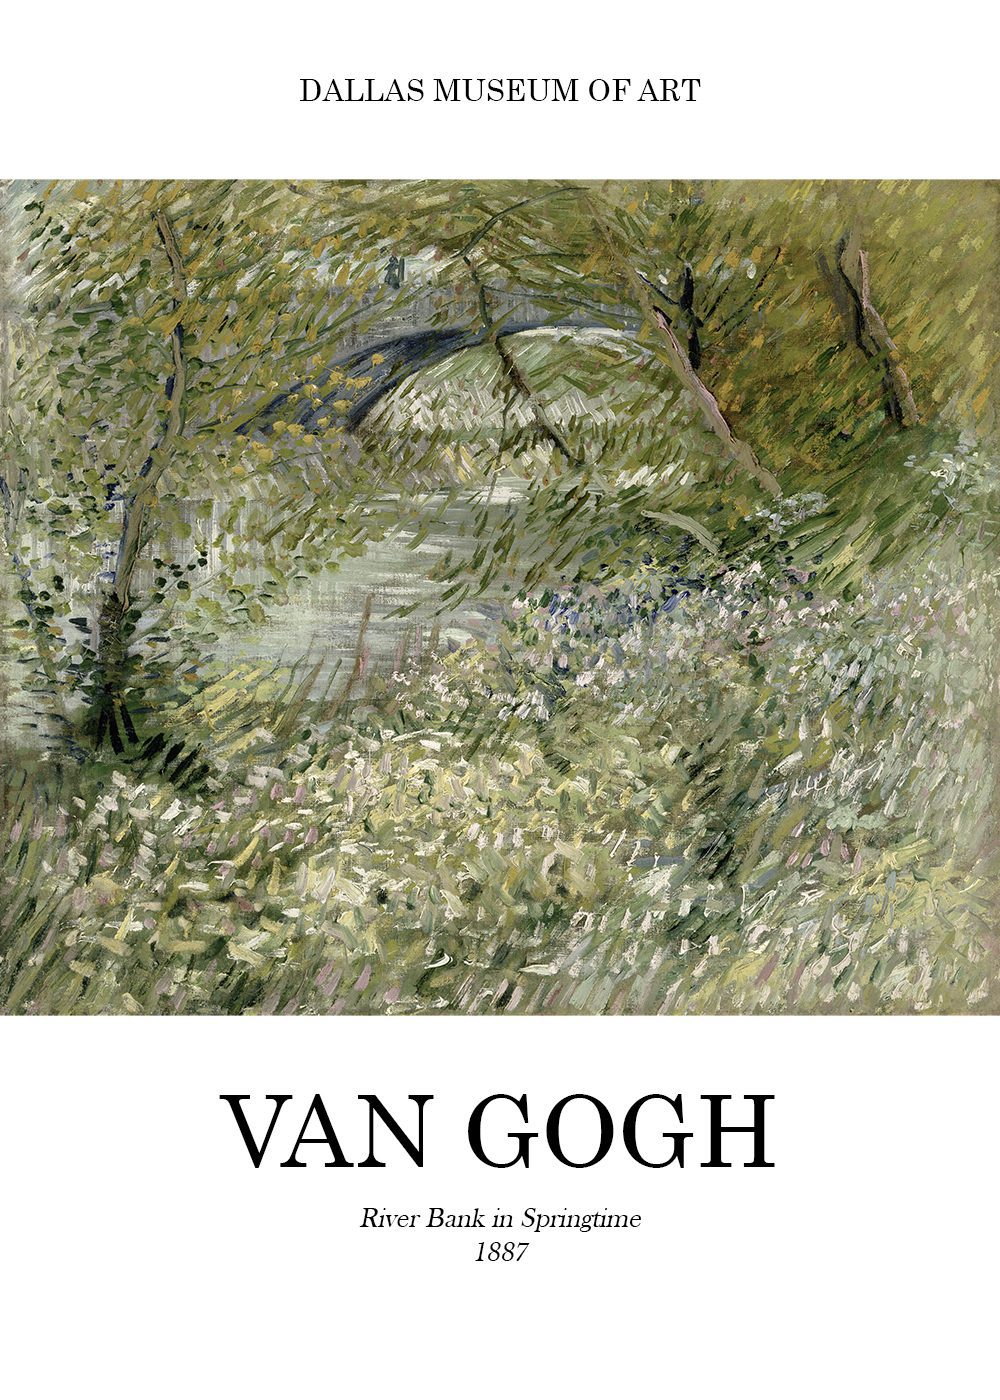 River Bank in Springtime van Gogh Poster